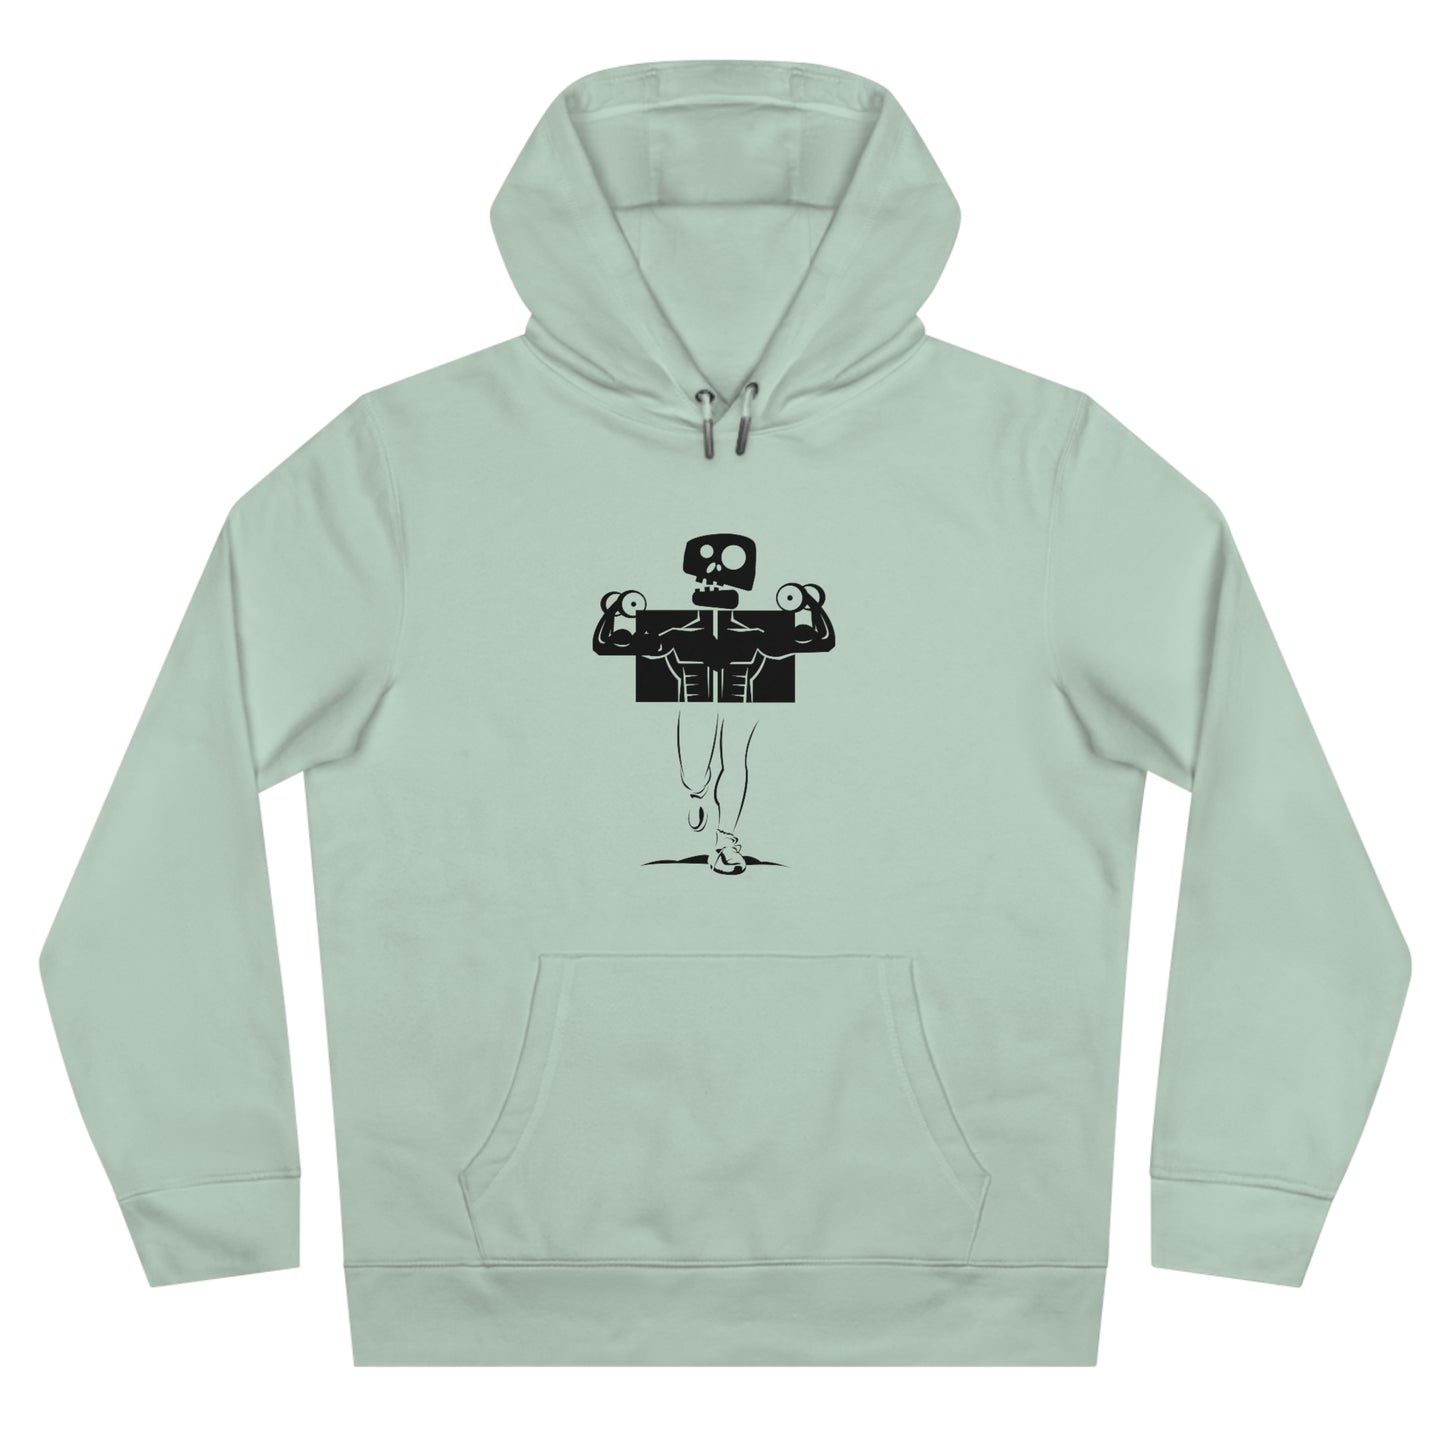 OWN MAN - King Hooded Sweatshirt